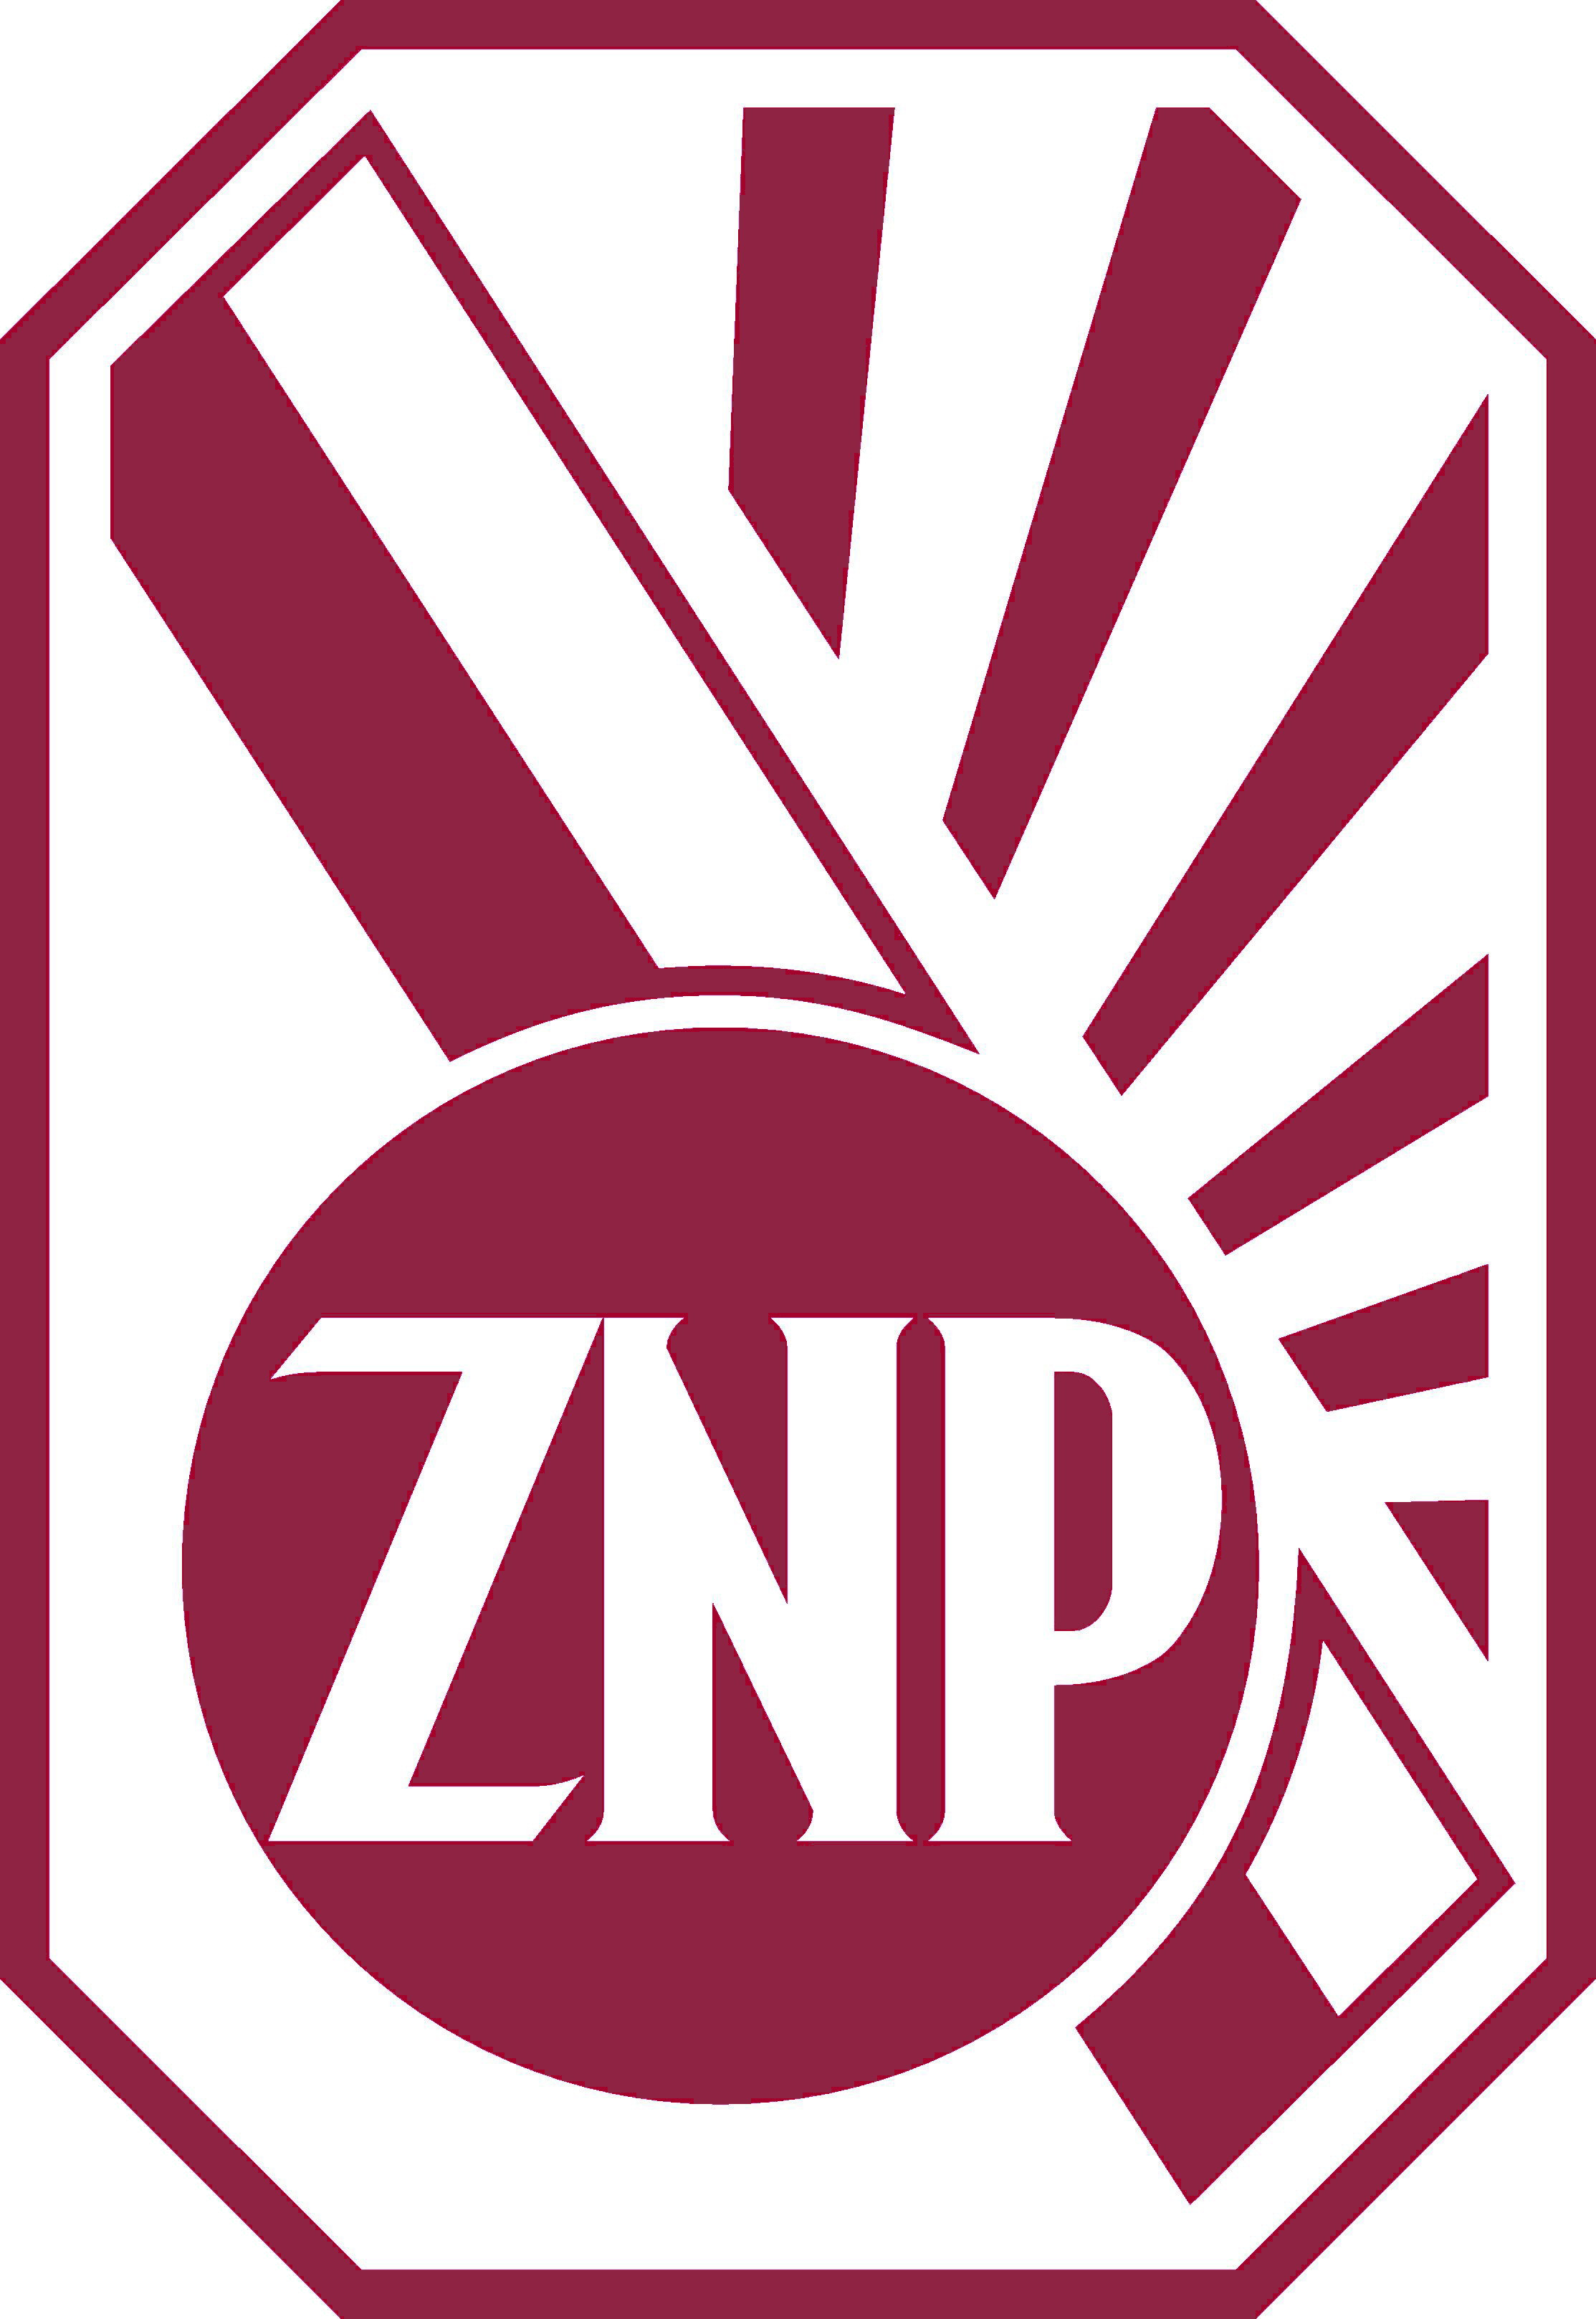 ZNP logo